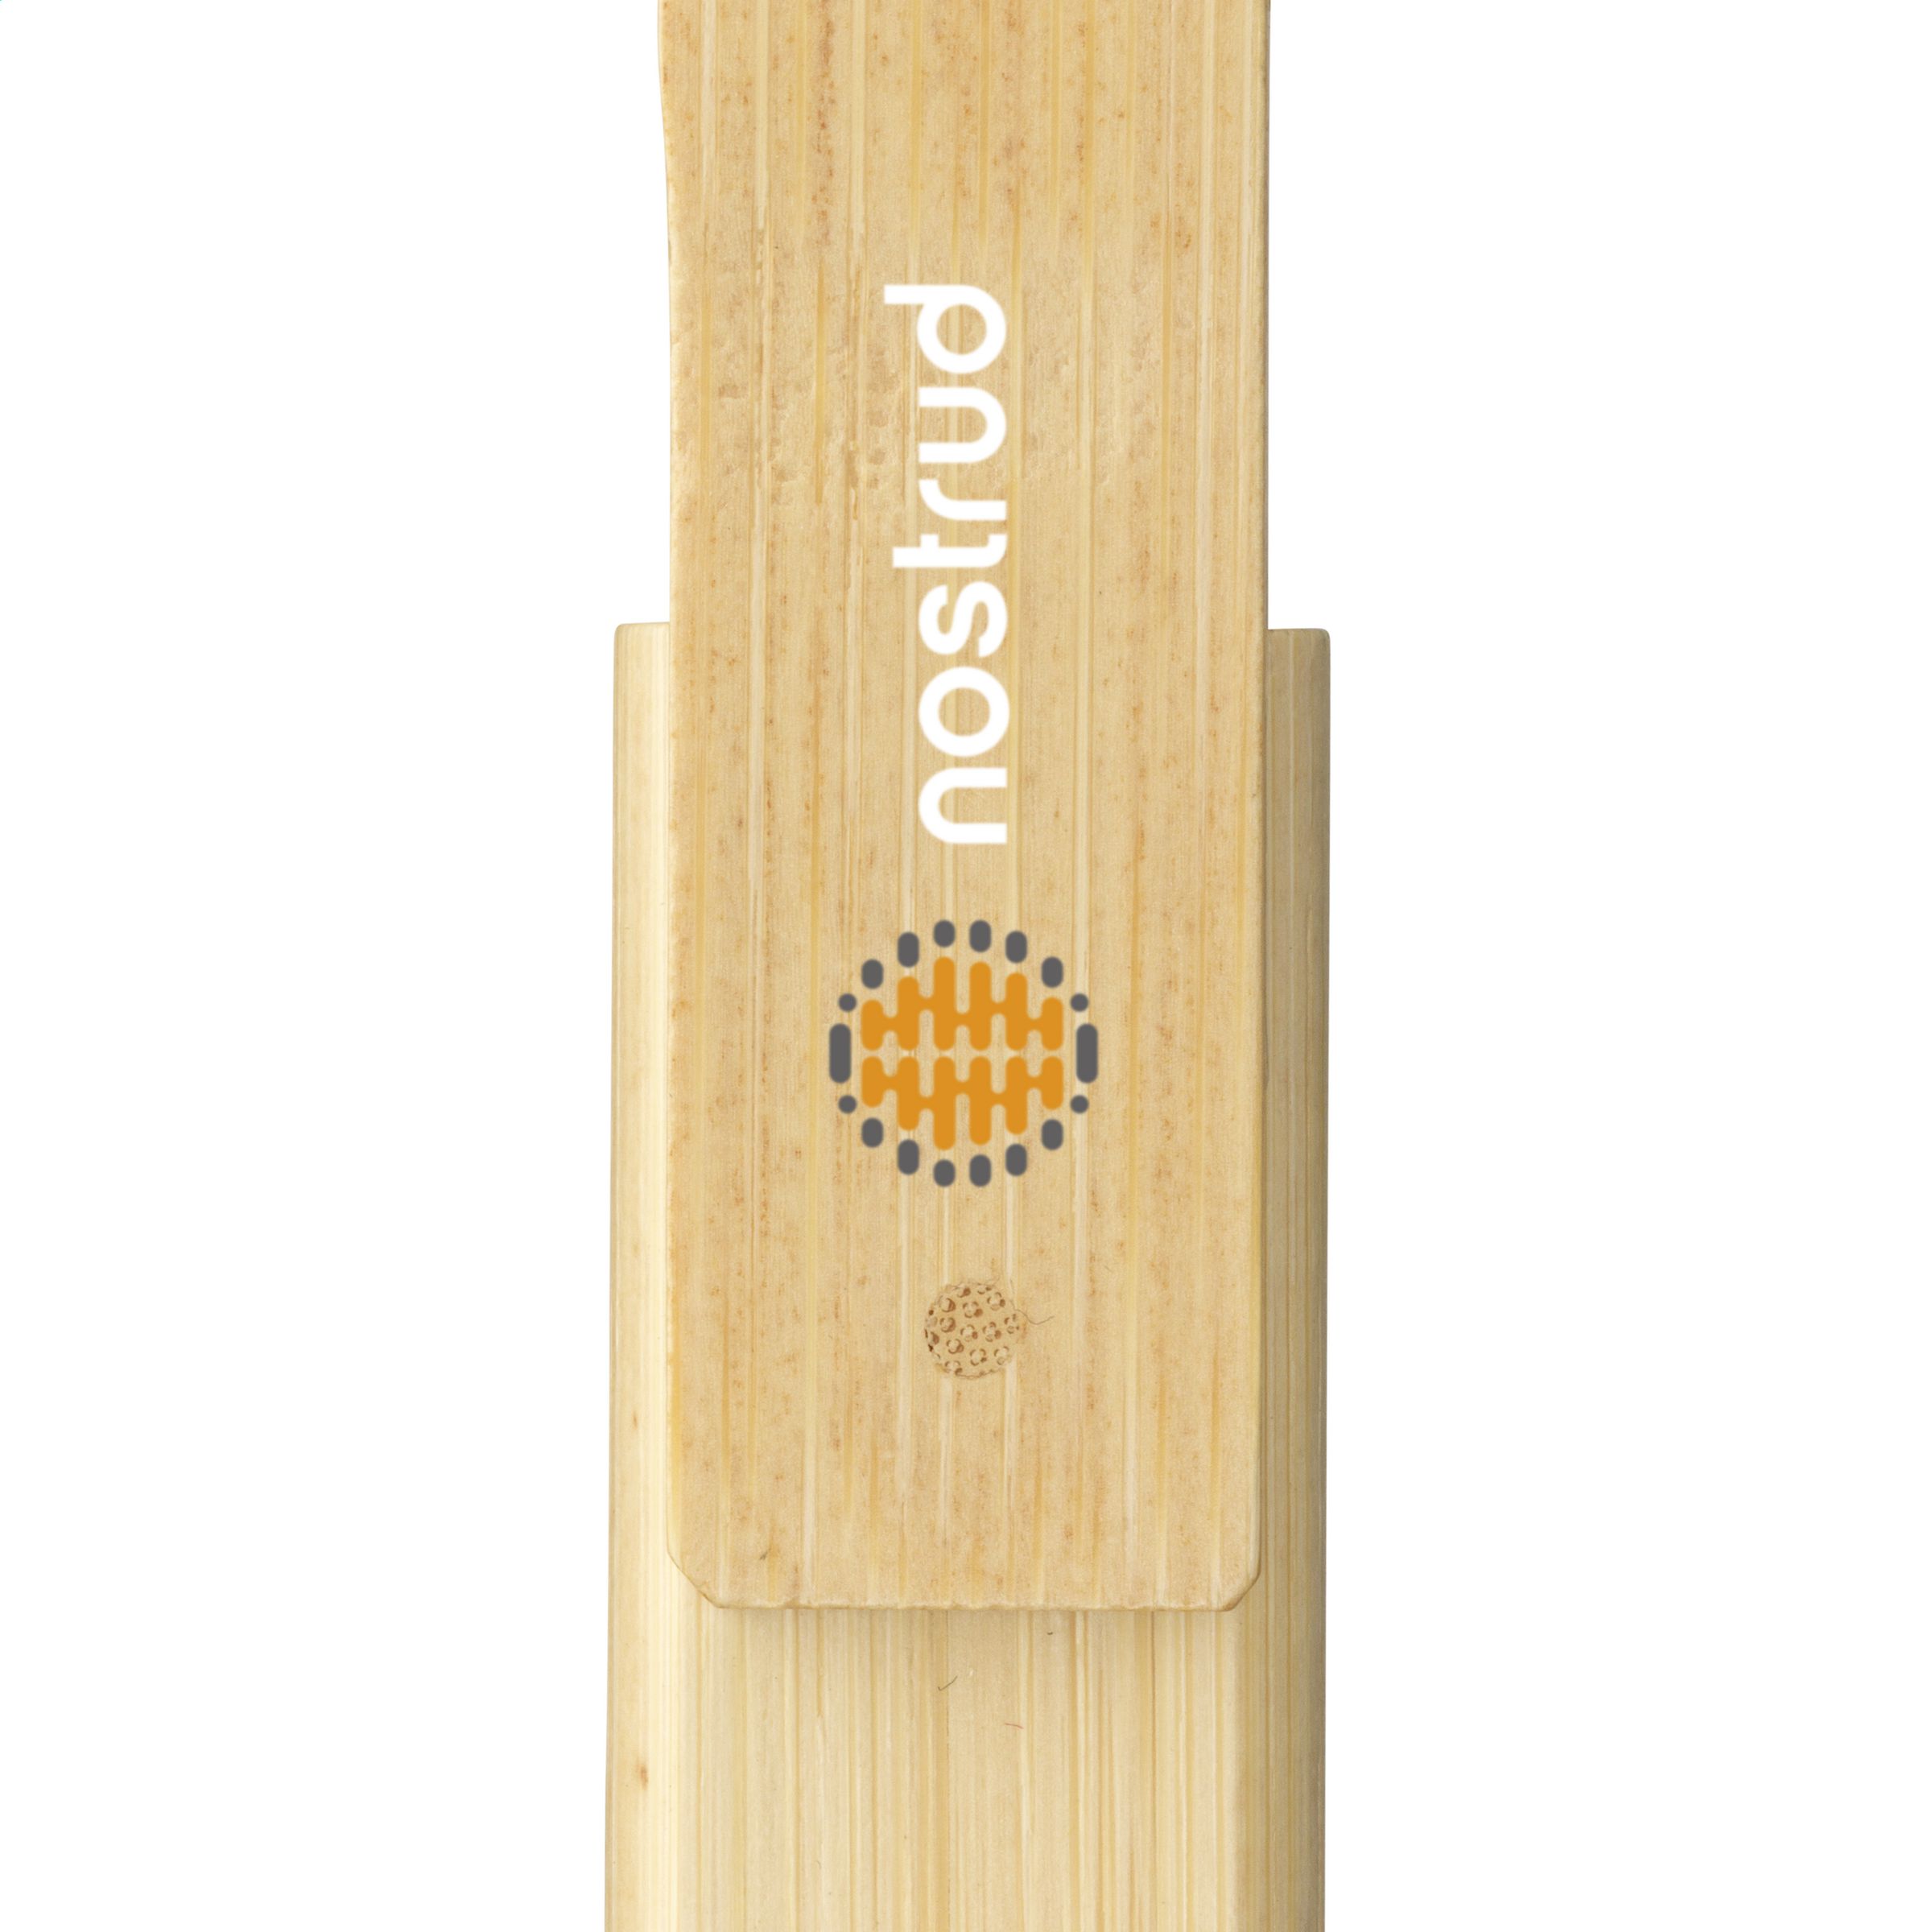 ECO Bambus USB Stick 2.0 - Saalbach